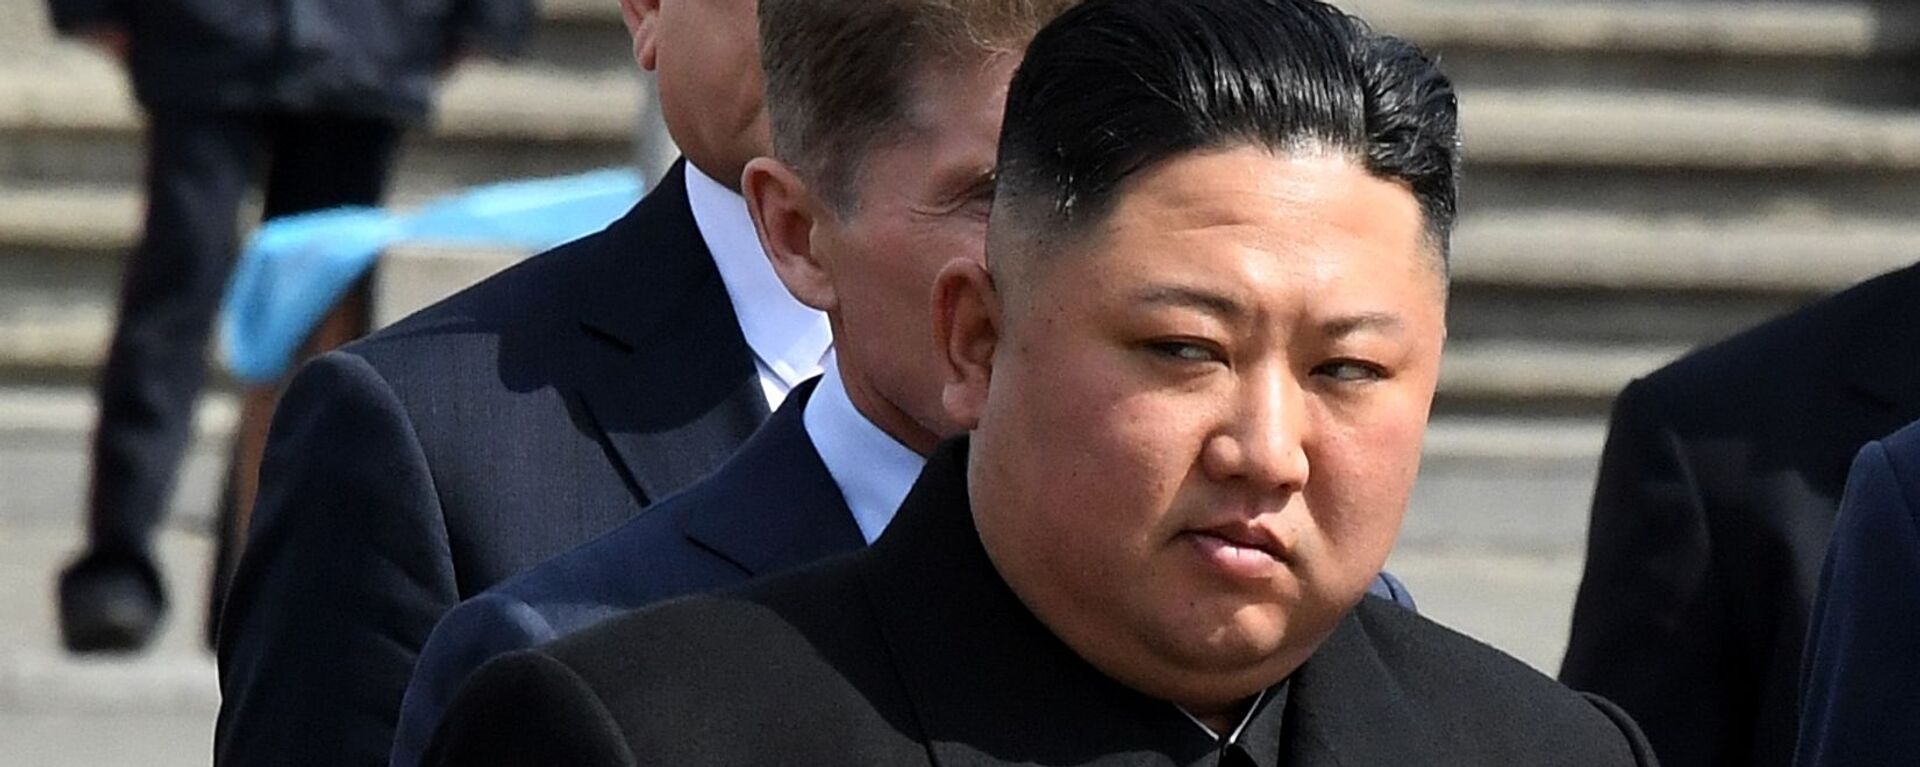 Kim Jong-un, líder de Corea del Norte (archivo) - Sputnik Mundo, 1920, 13.01.2021